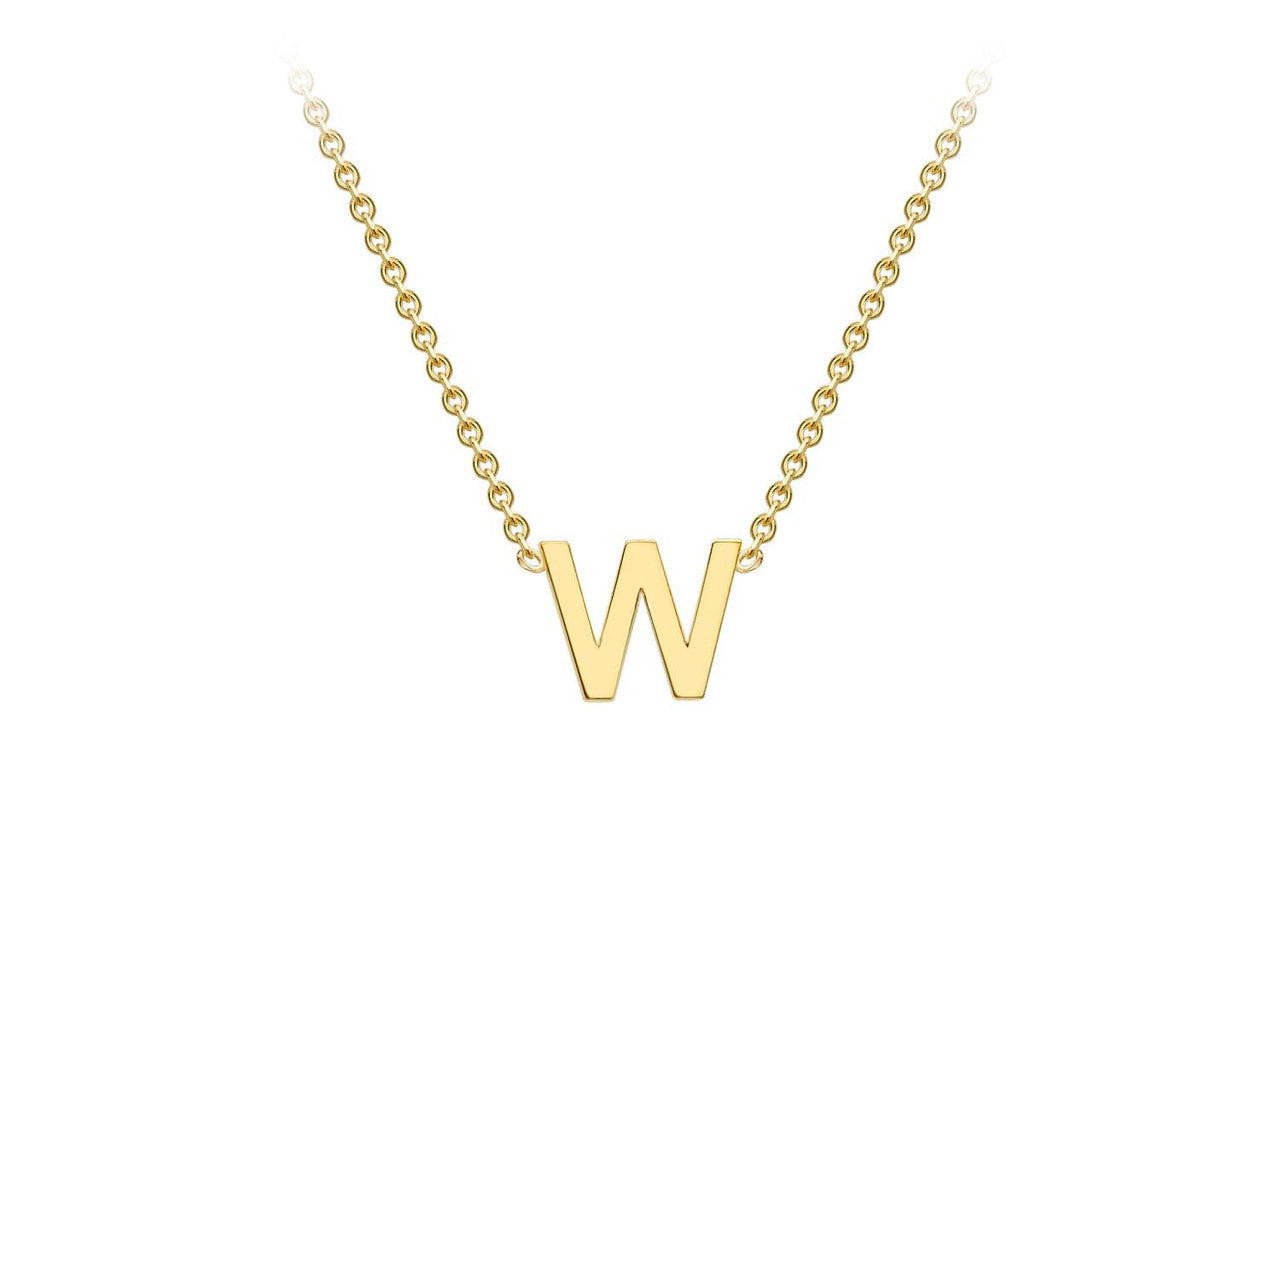 Ice Jewellery 9K Yellow Gold 'W' Initial Adjustable Letter Necklace 38/43cm - 1.19.0172 | Ice Jewellery Australia